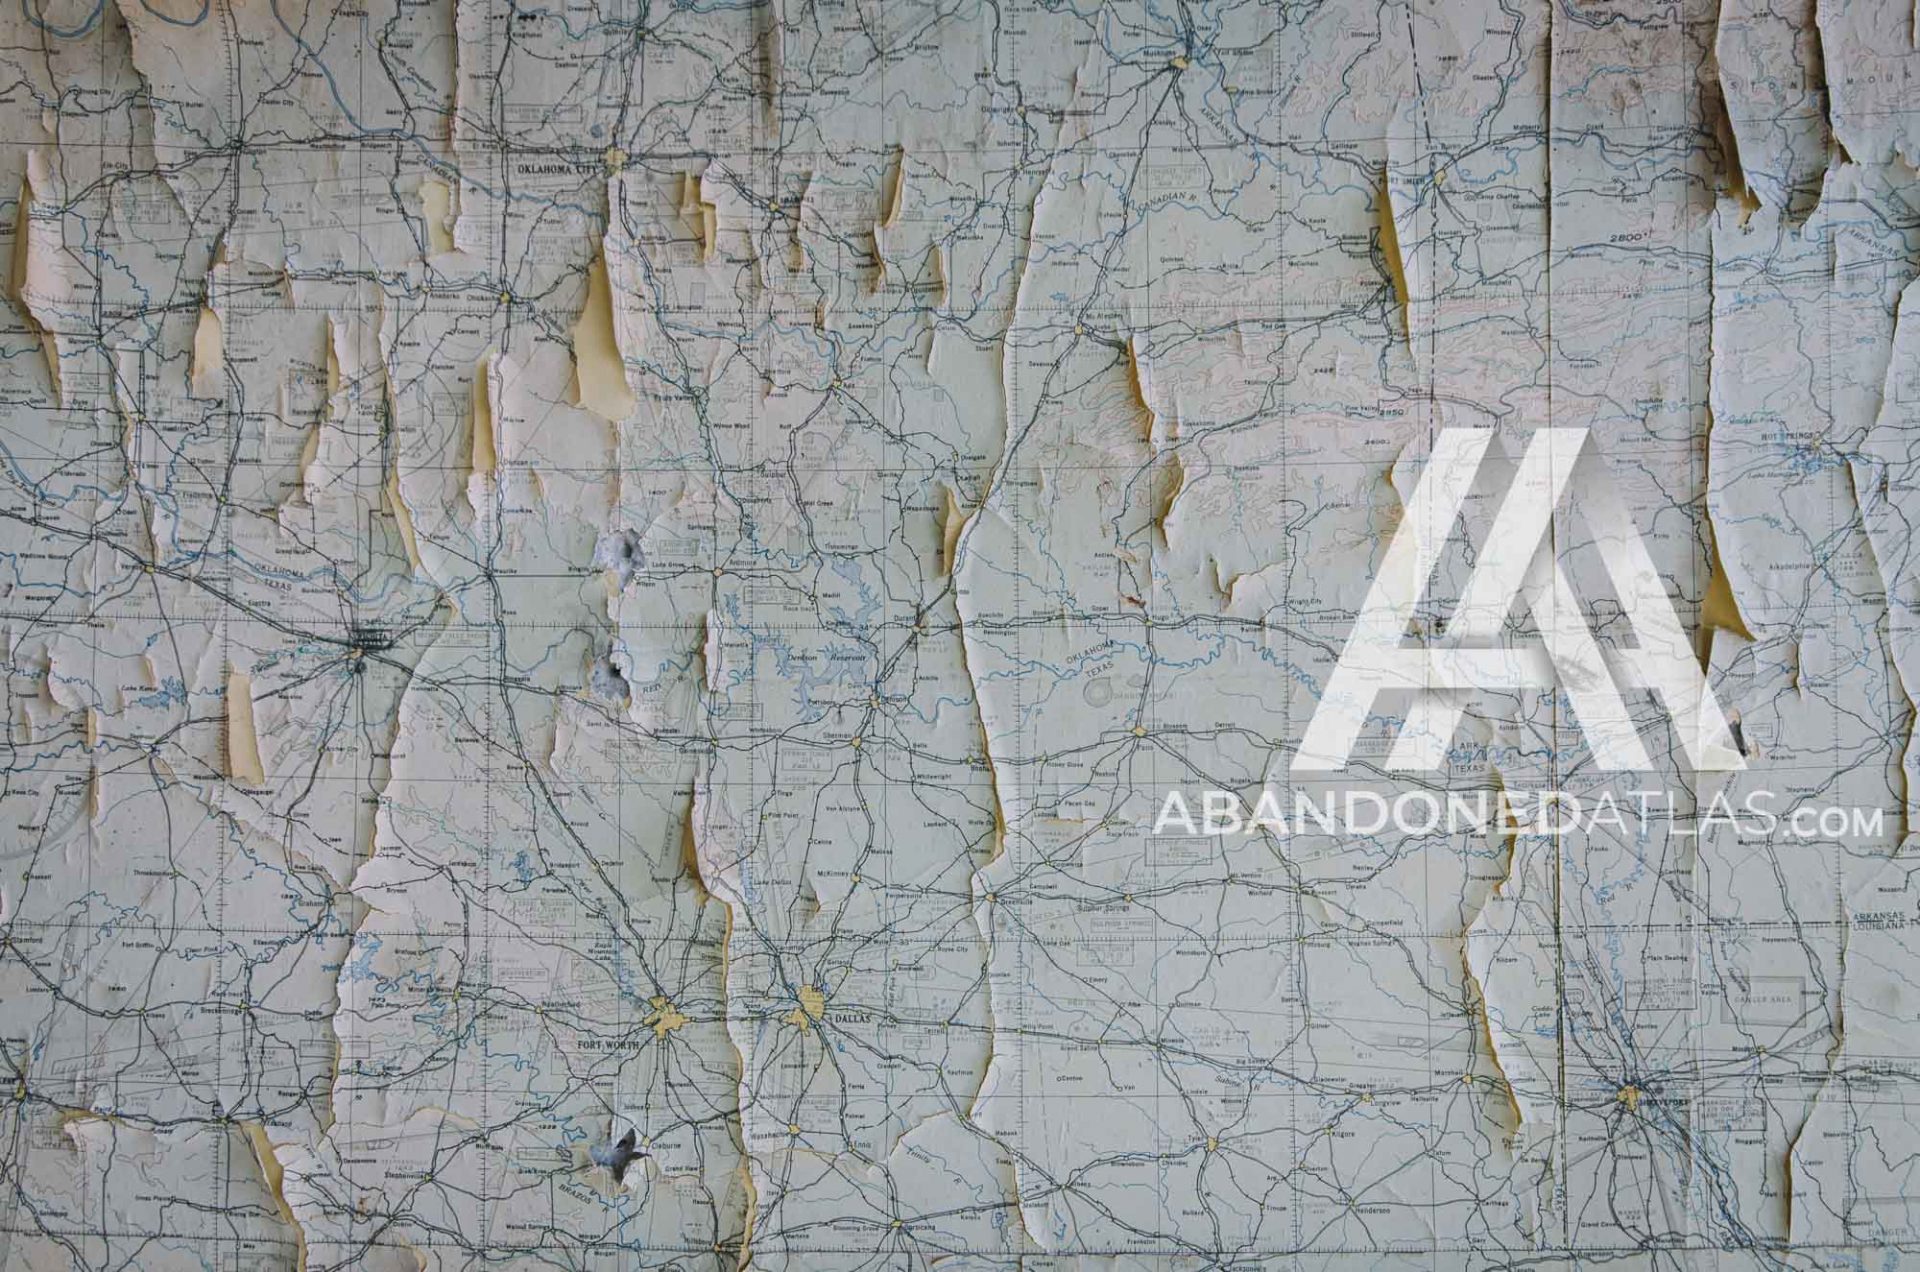 Abandoned Atlas Map